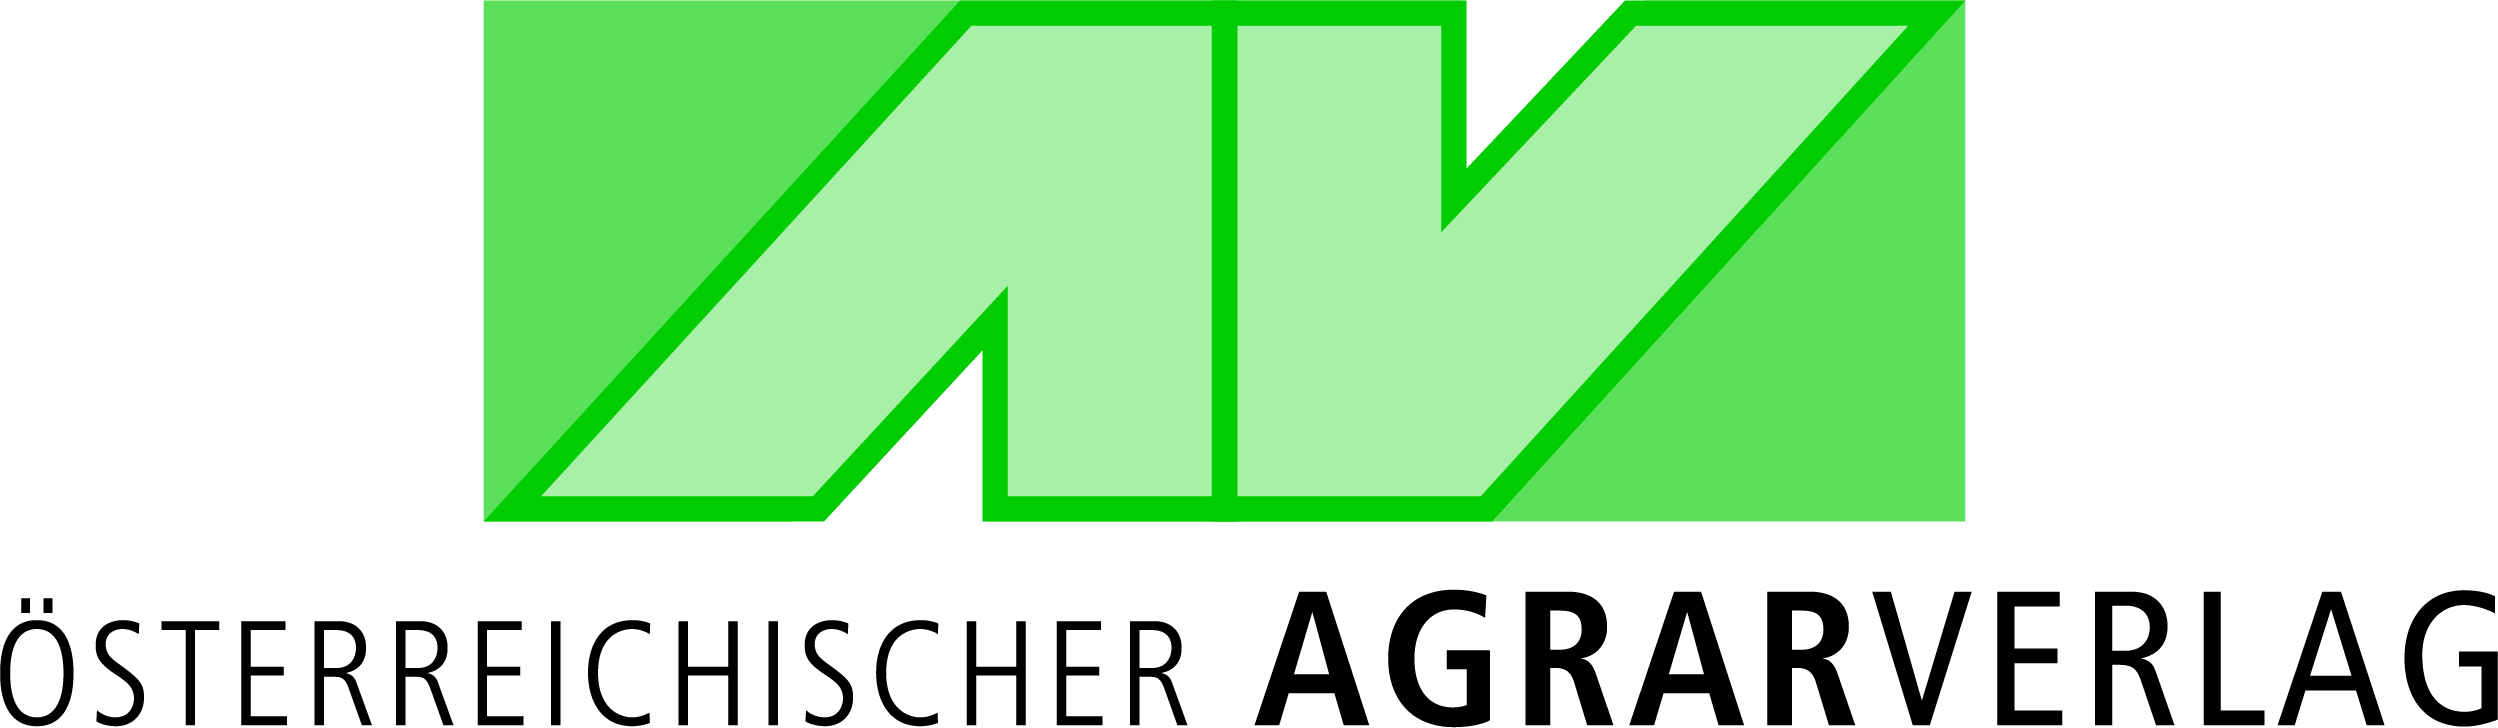 Österreichischer Agrarverlag Logo © (Agrarverlag)